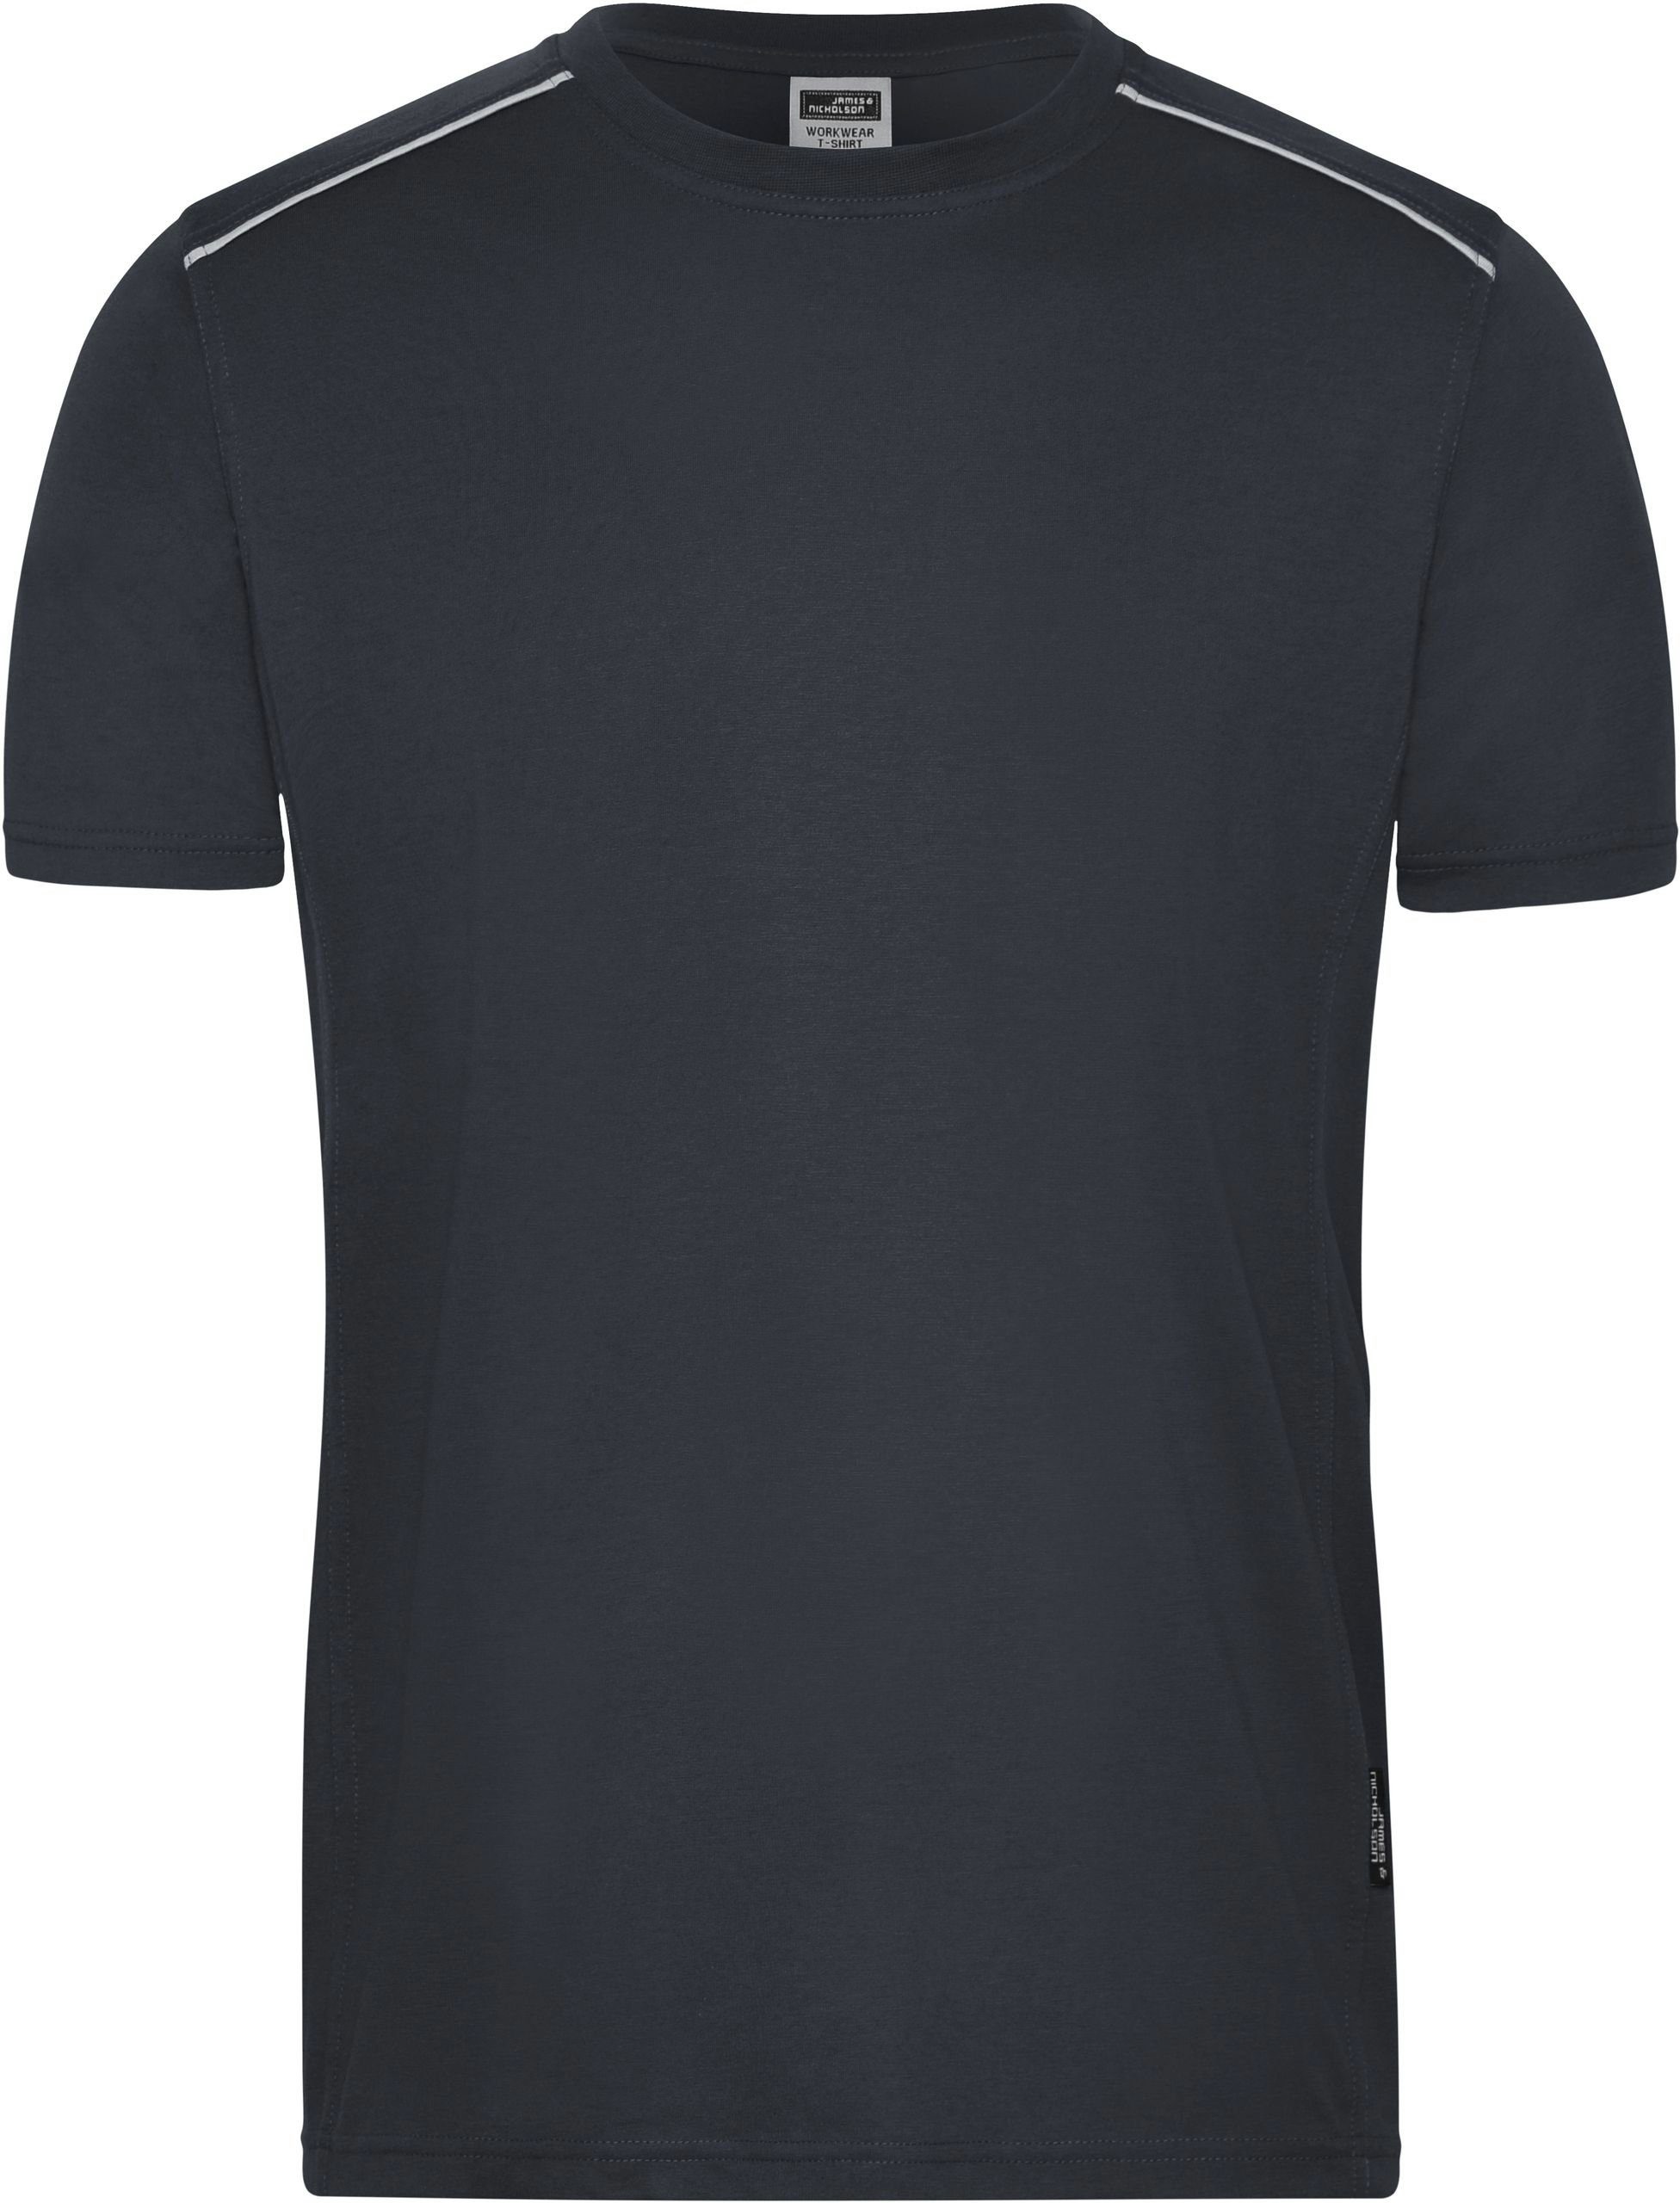 Workwear Nicholson James & T-Shirt T-Shirt Baumwolle FaS50890 Arbeits Bio Olive -Solid-